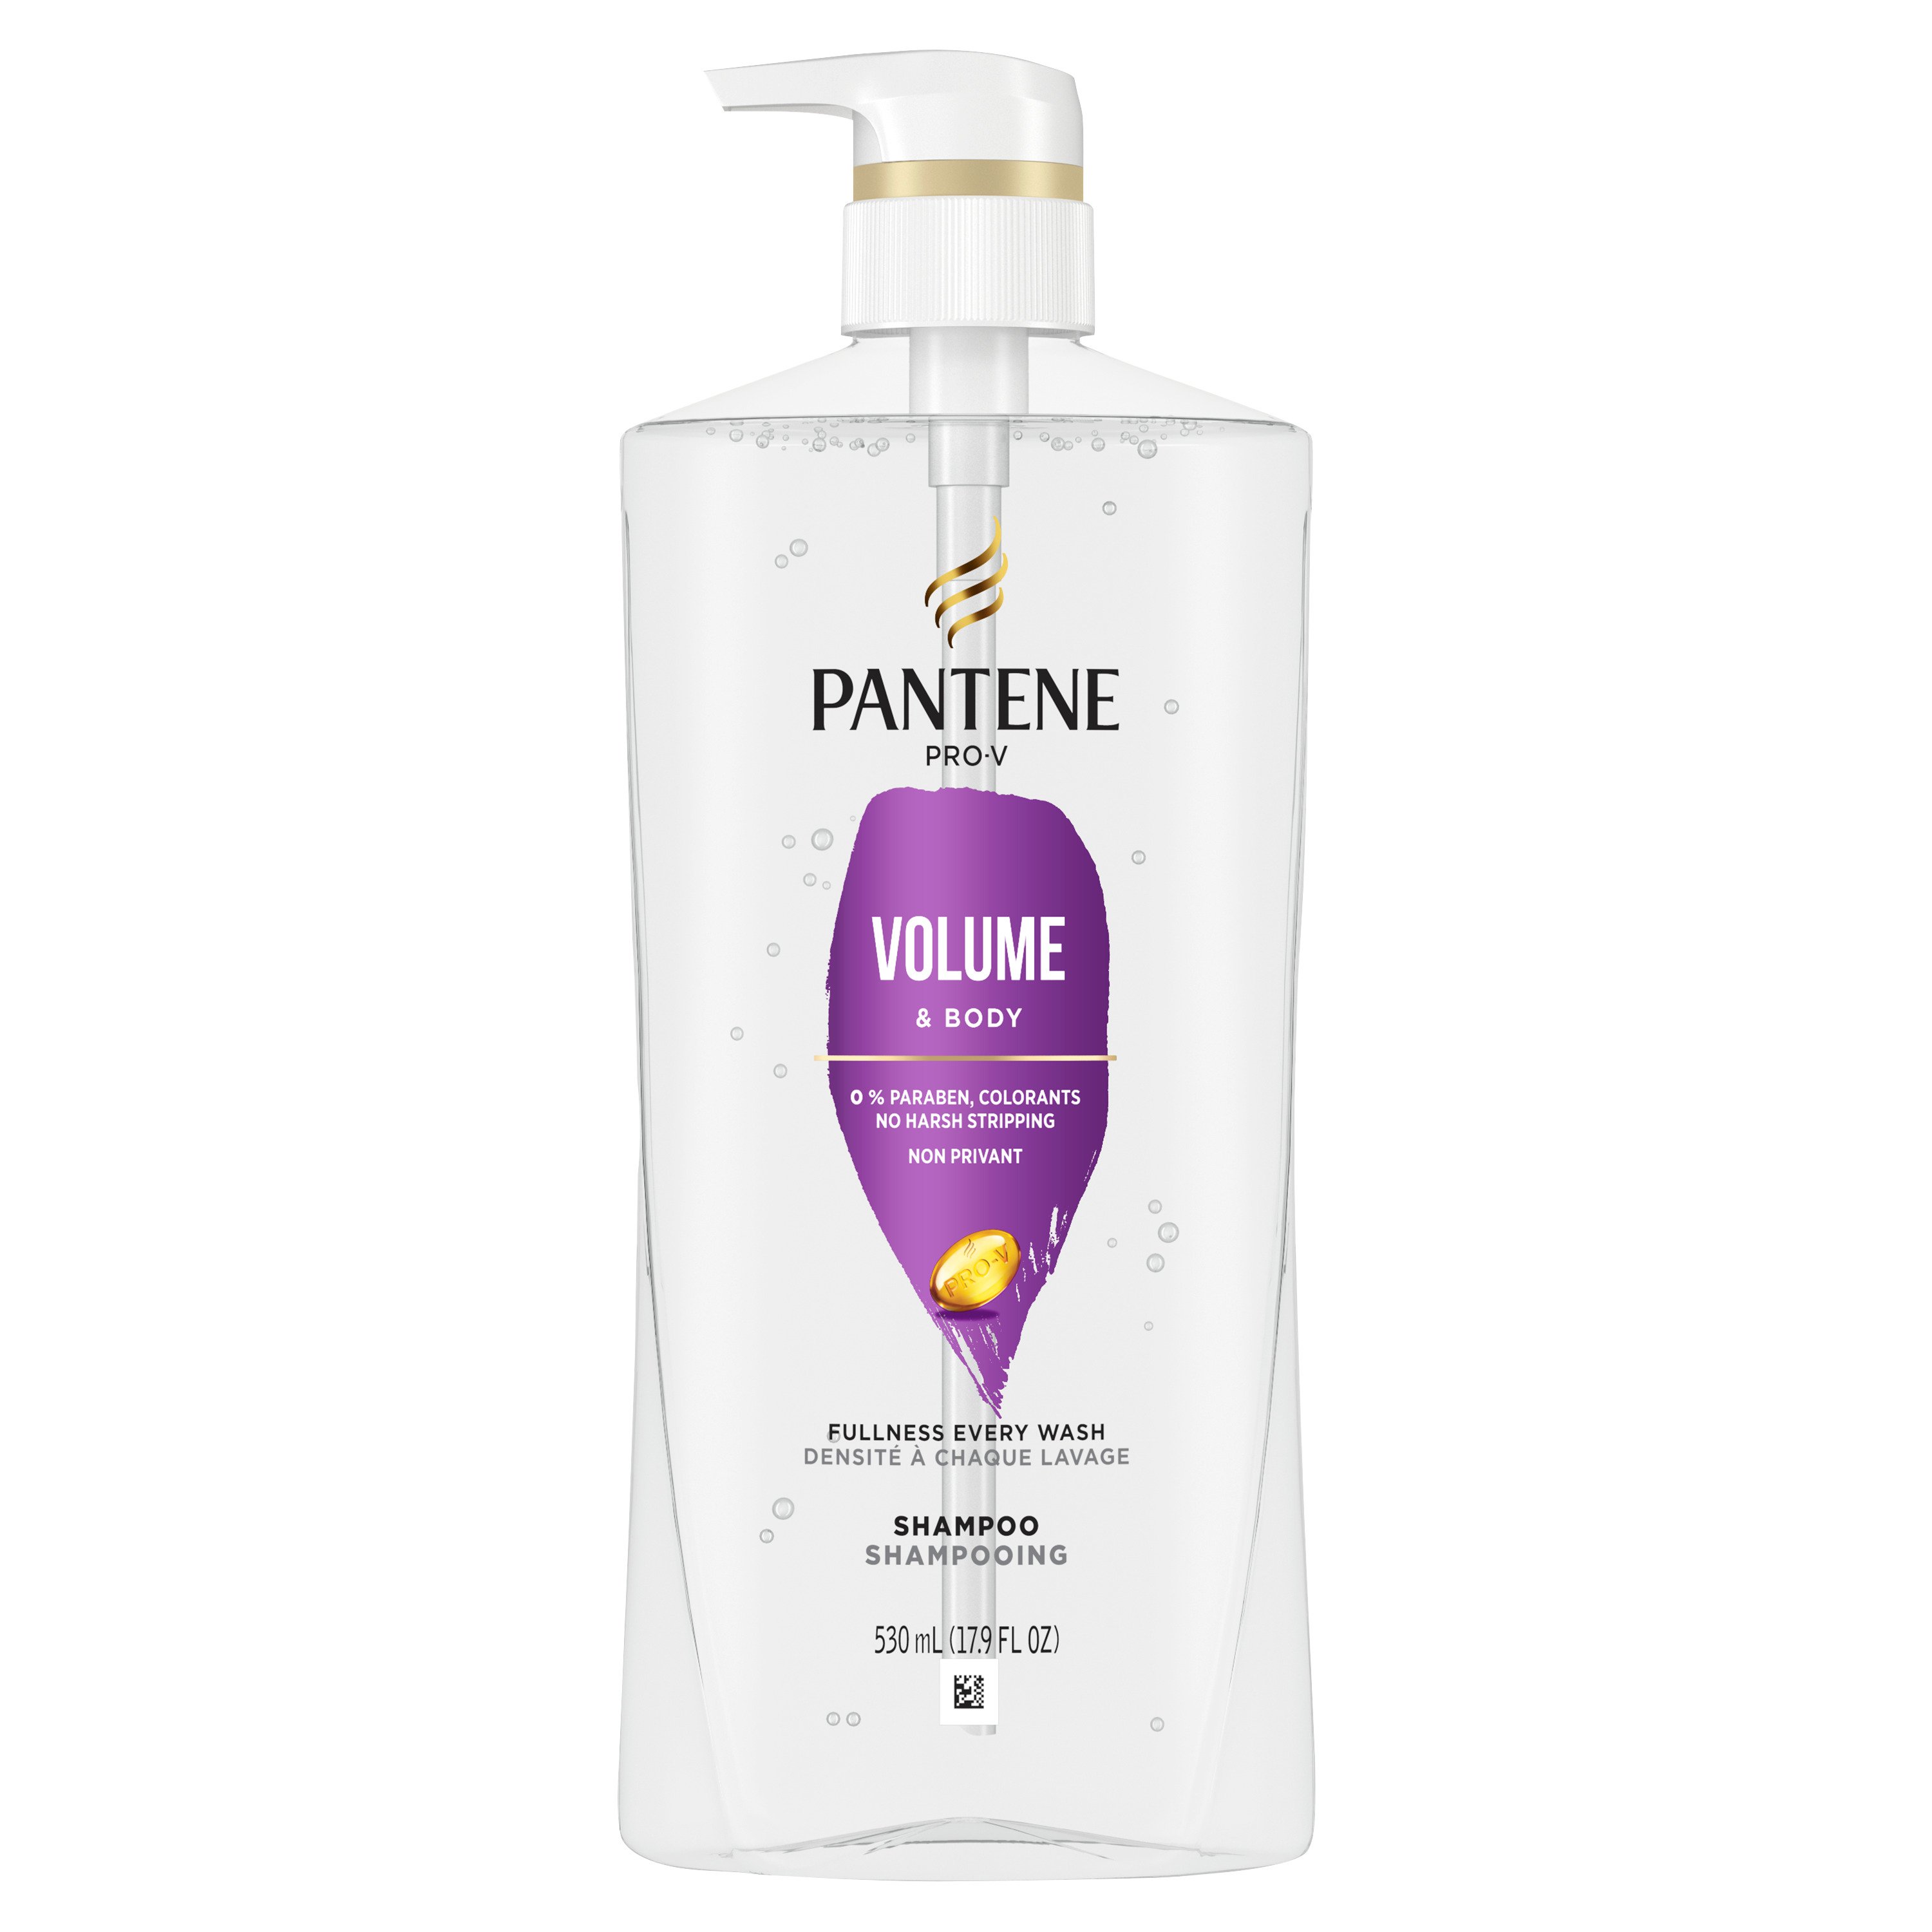 Pantene PRO-V Volume & Body Shampoo - Shop Shampoo & Conditioner at H-E-B